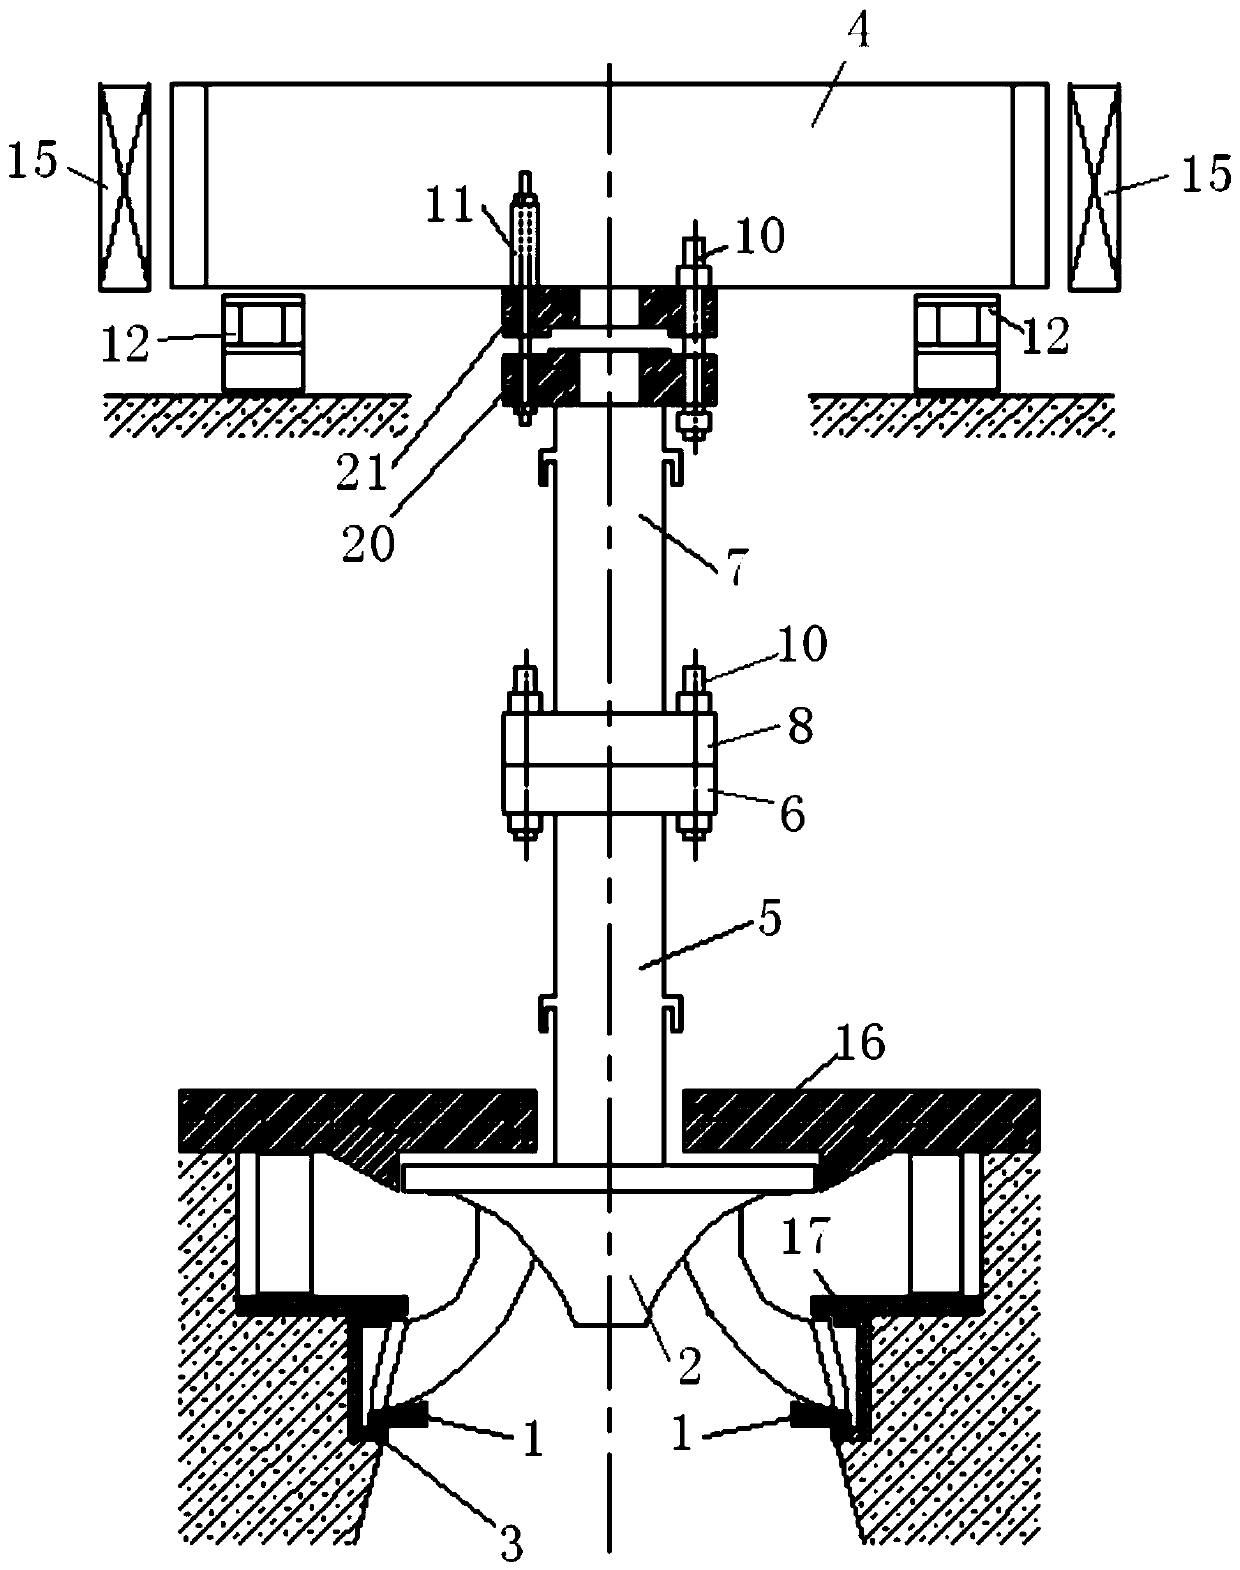 Method for disassembling main shaft of vertical hydro-generator